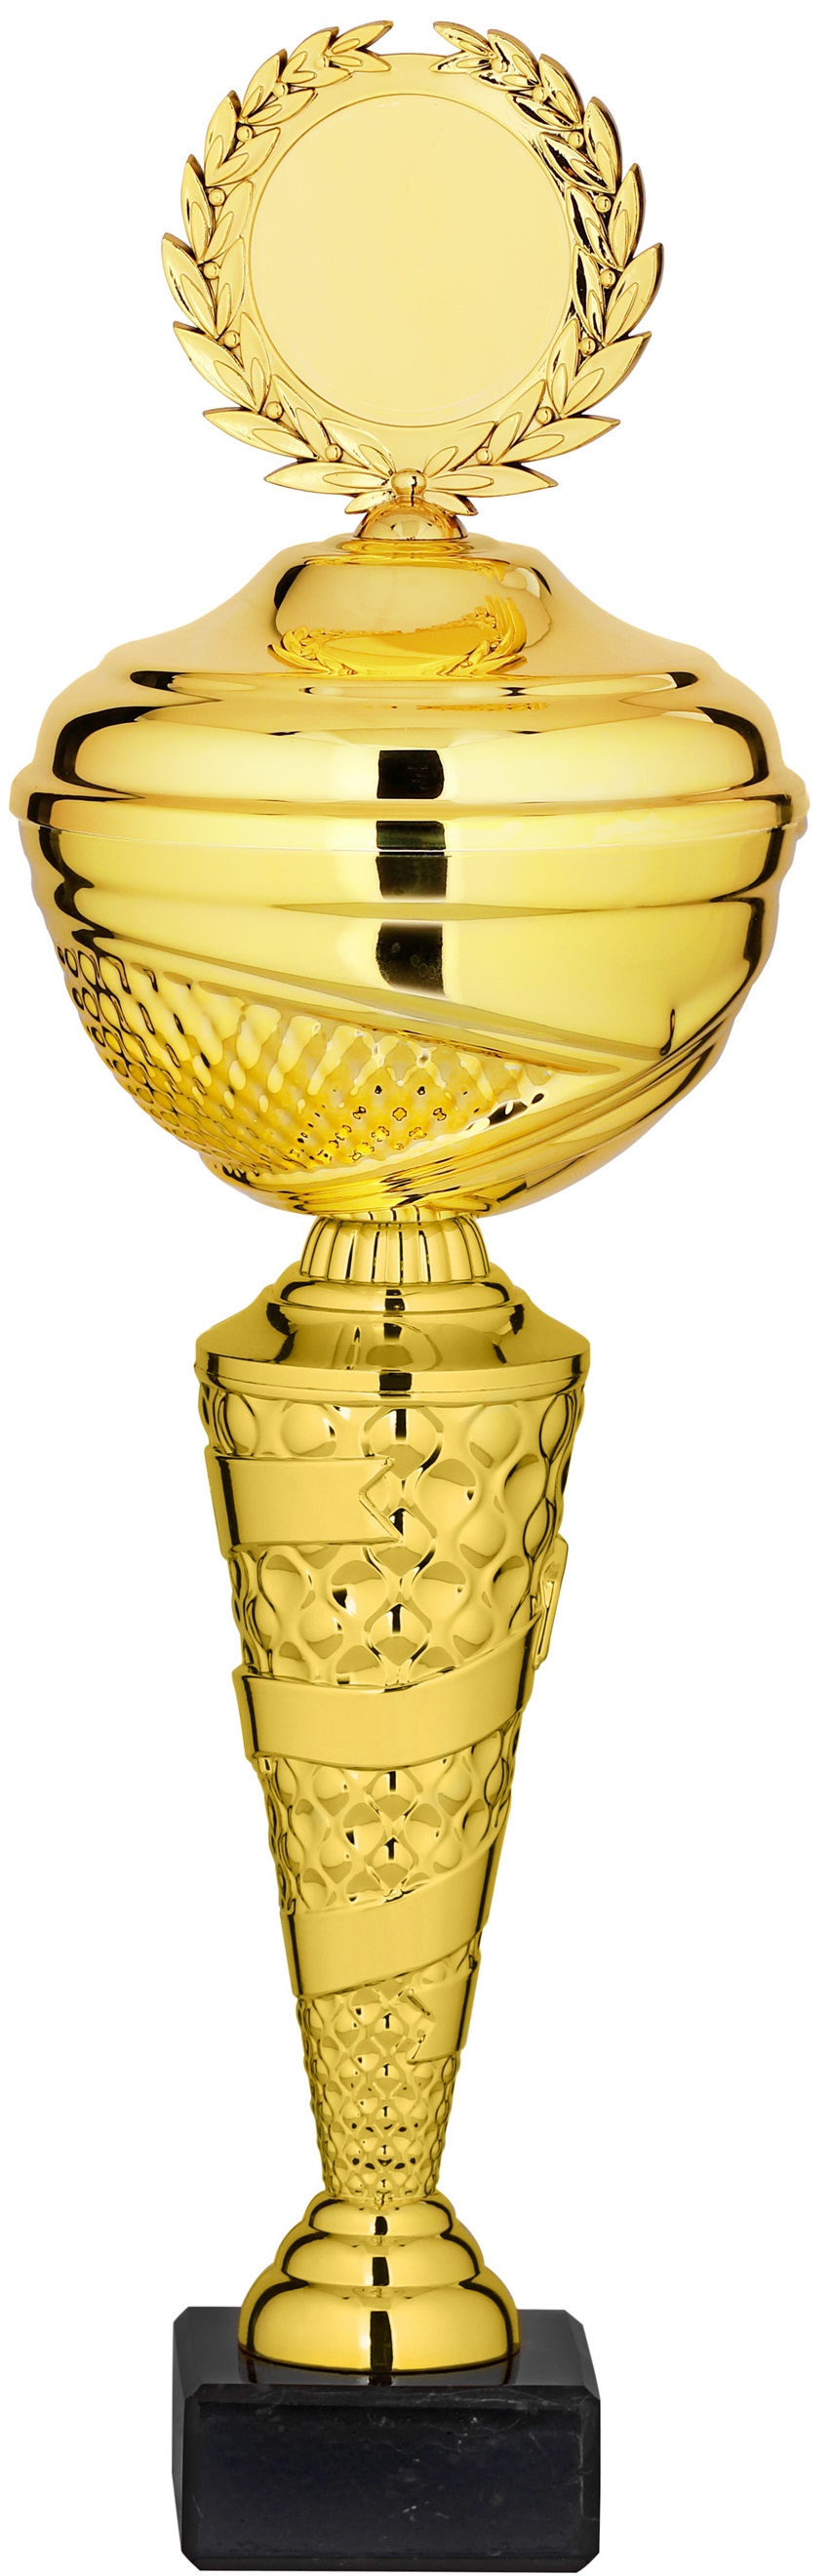 Pokal P600-Gold  inkl. Gravur und Emblem 51,0 cm